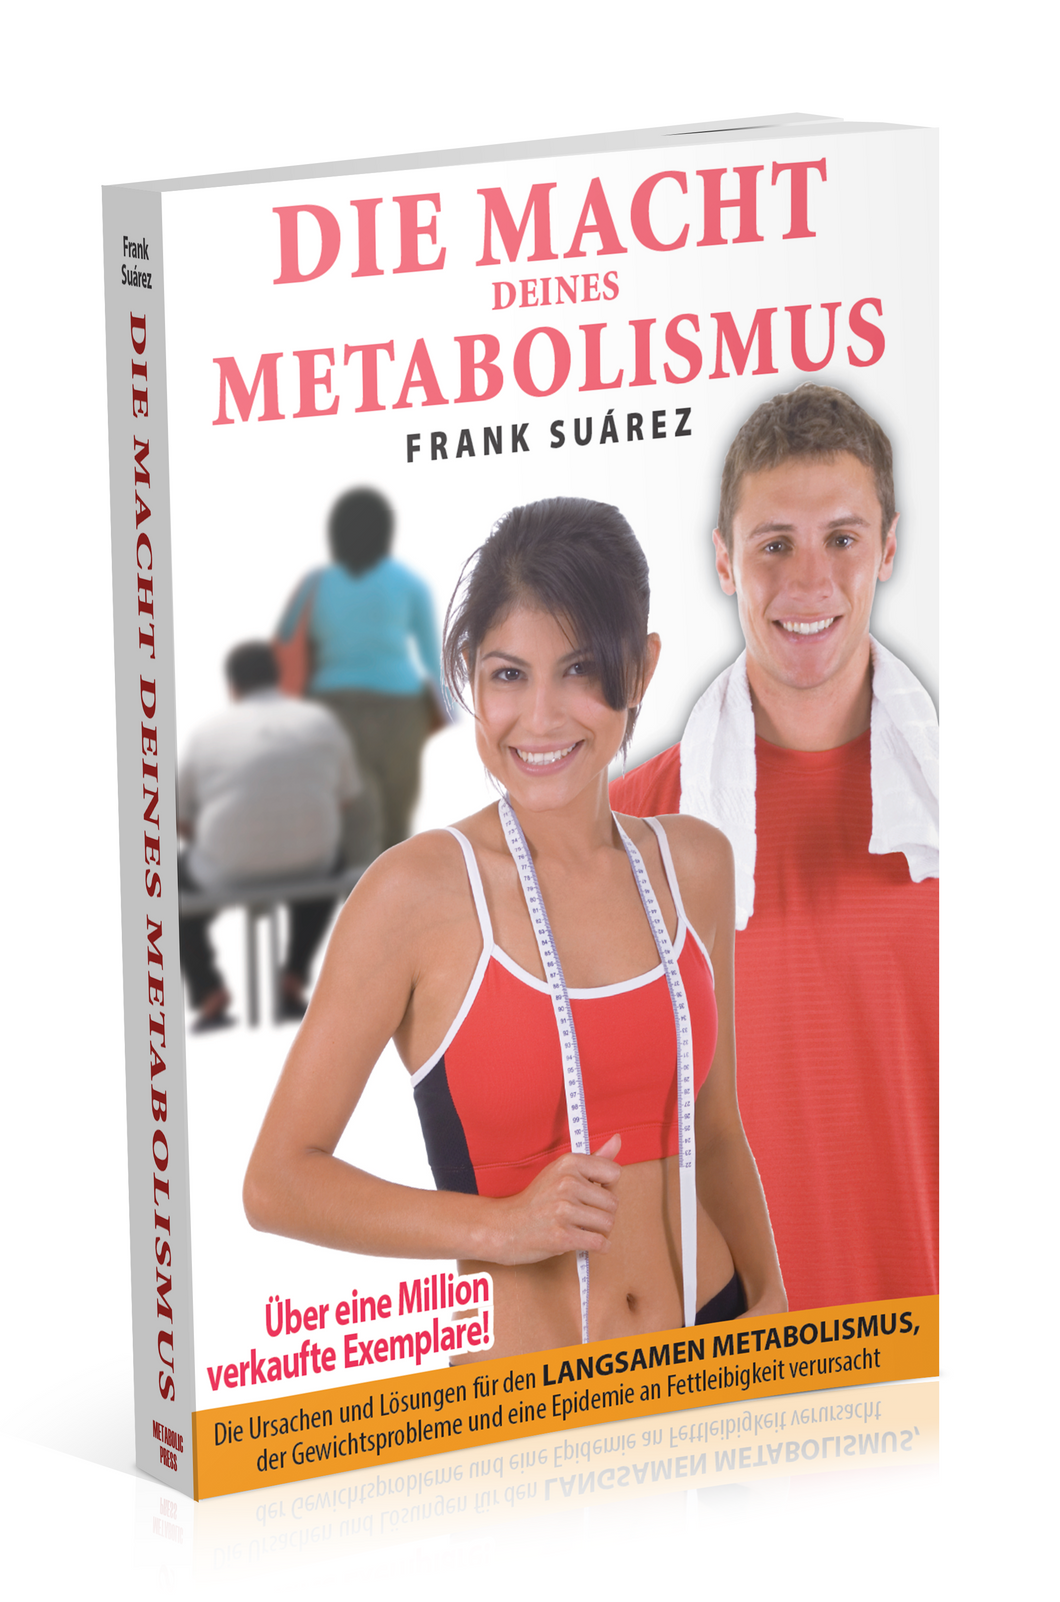 Die Macht deines Metabolismus (German)